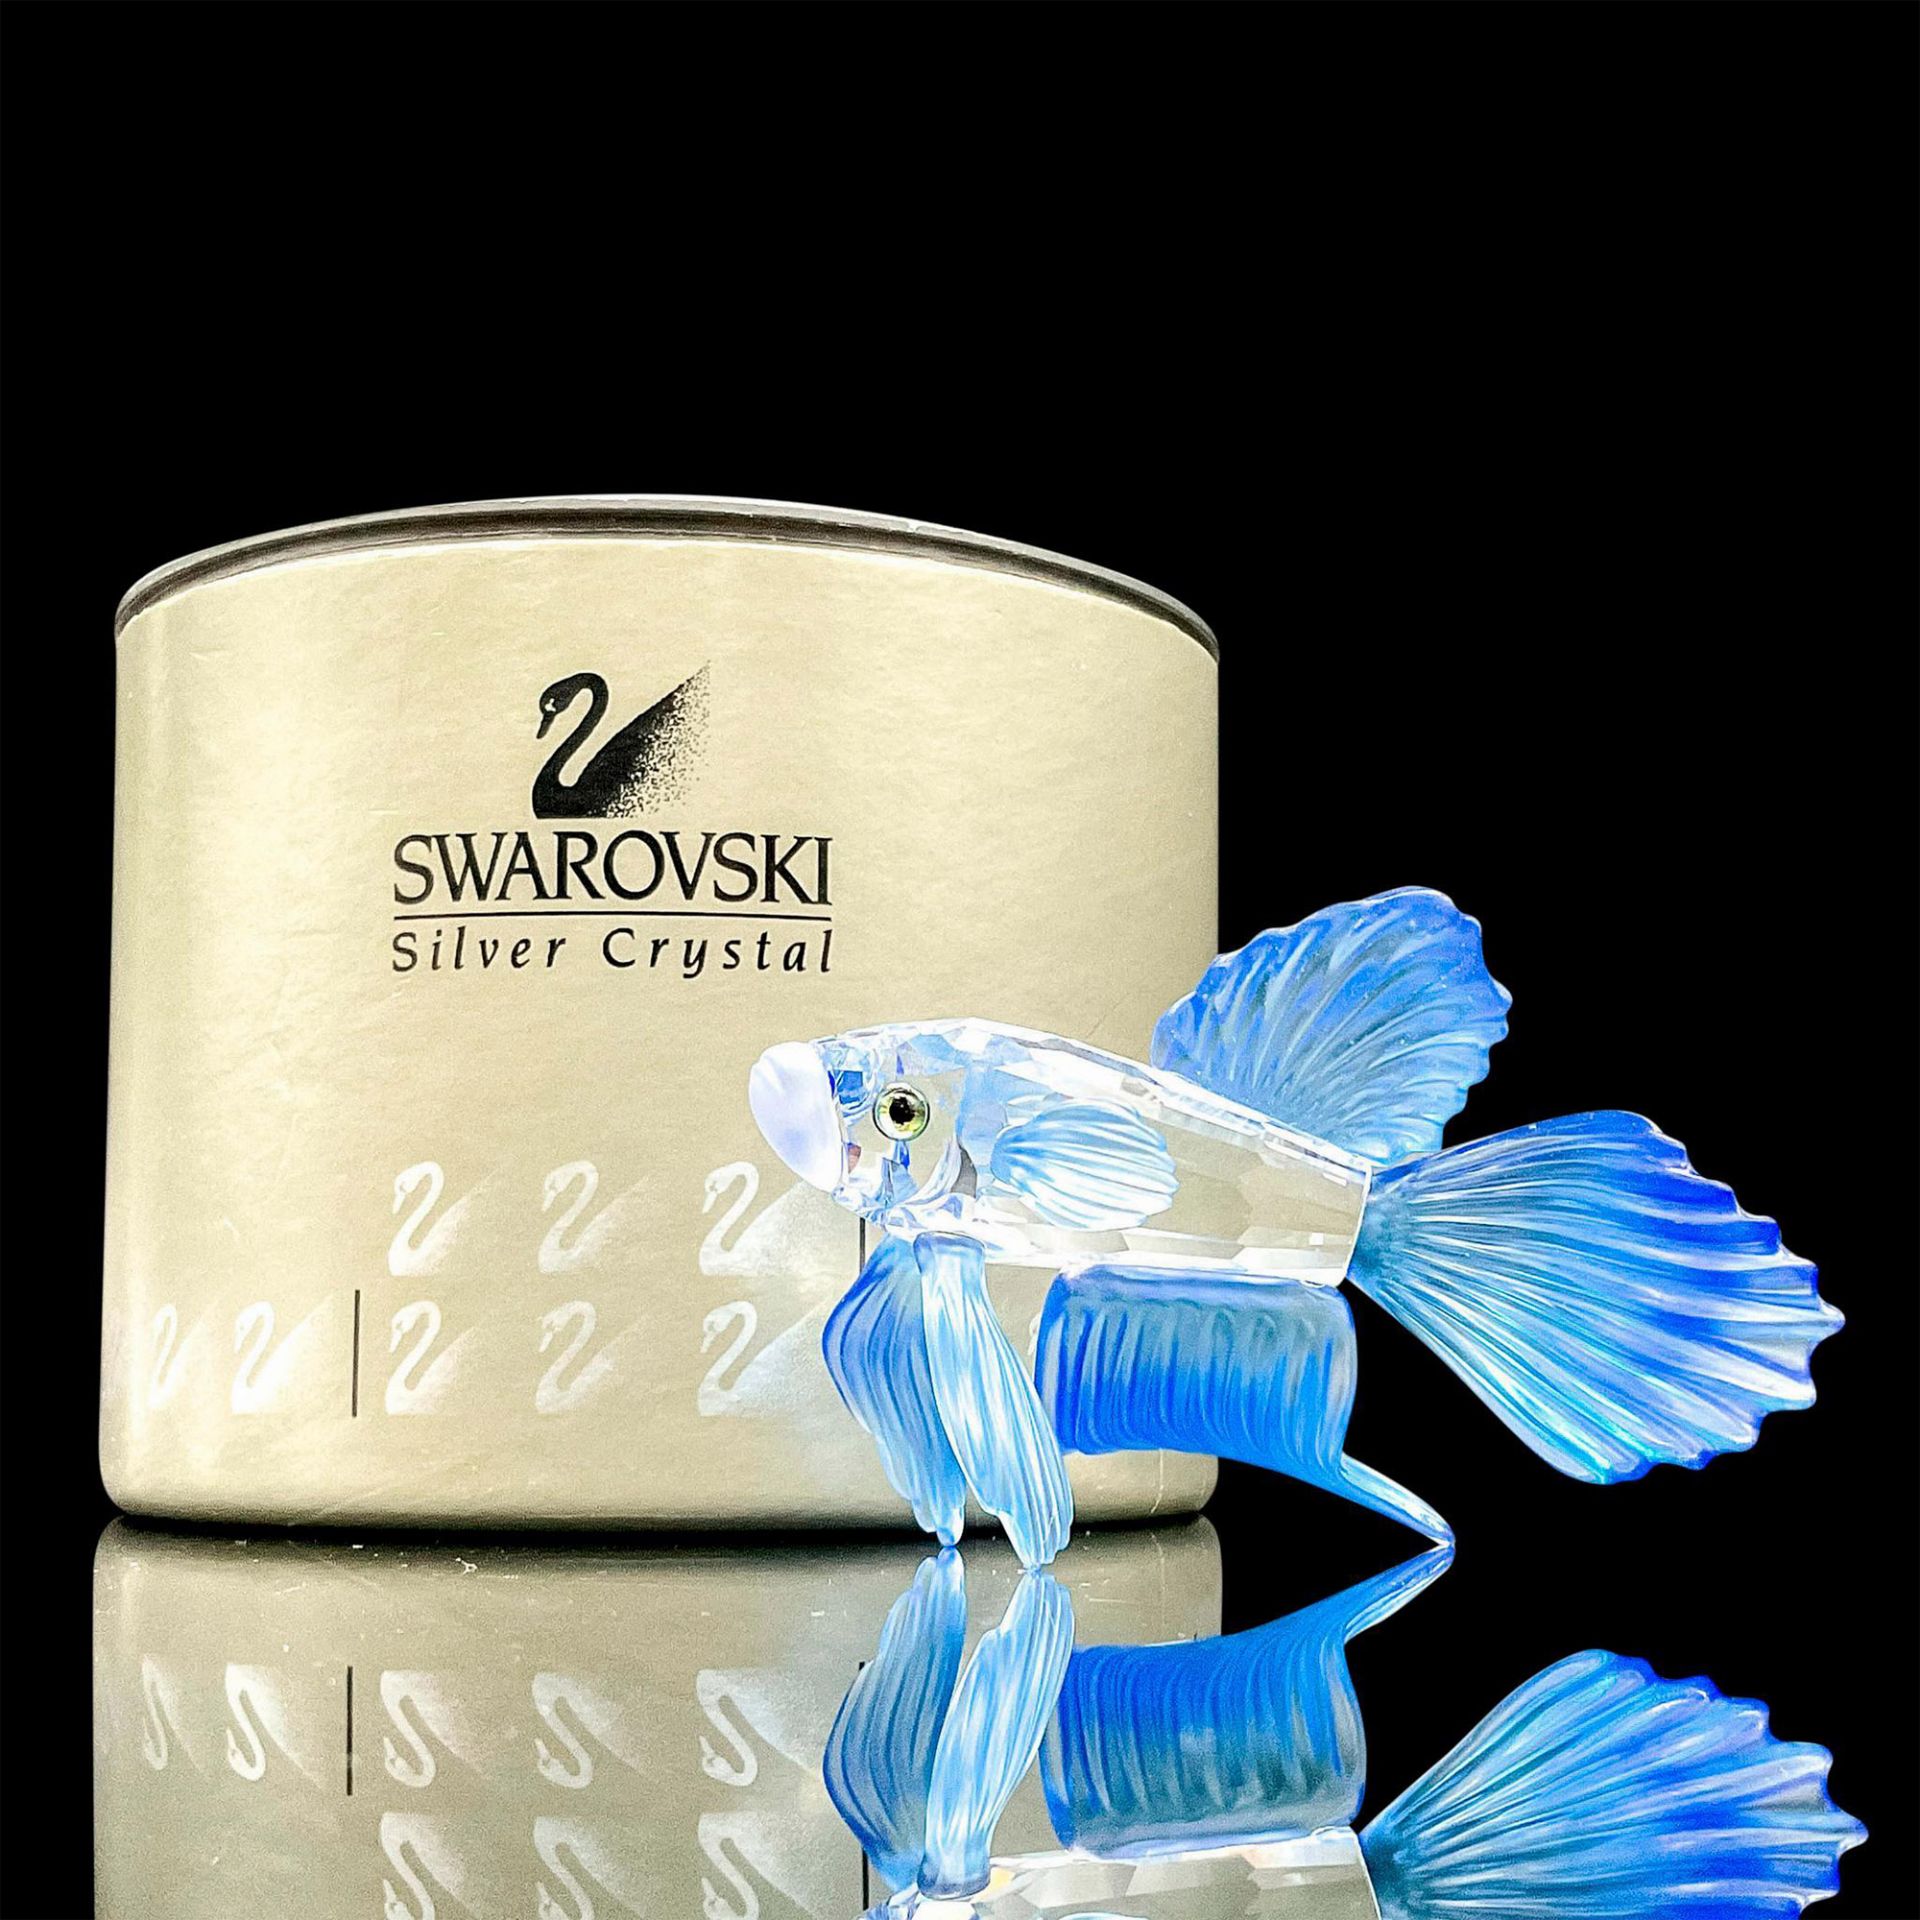 Swarovski Silver Crystal Figurine, Siamese Fighting Fish - Image 2 of 4